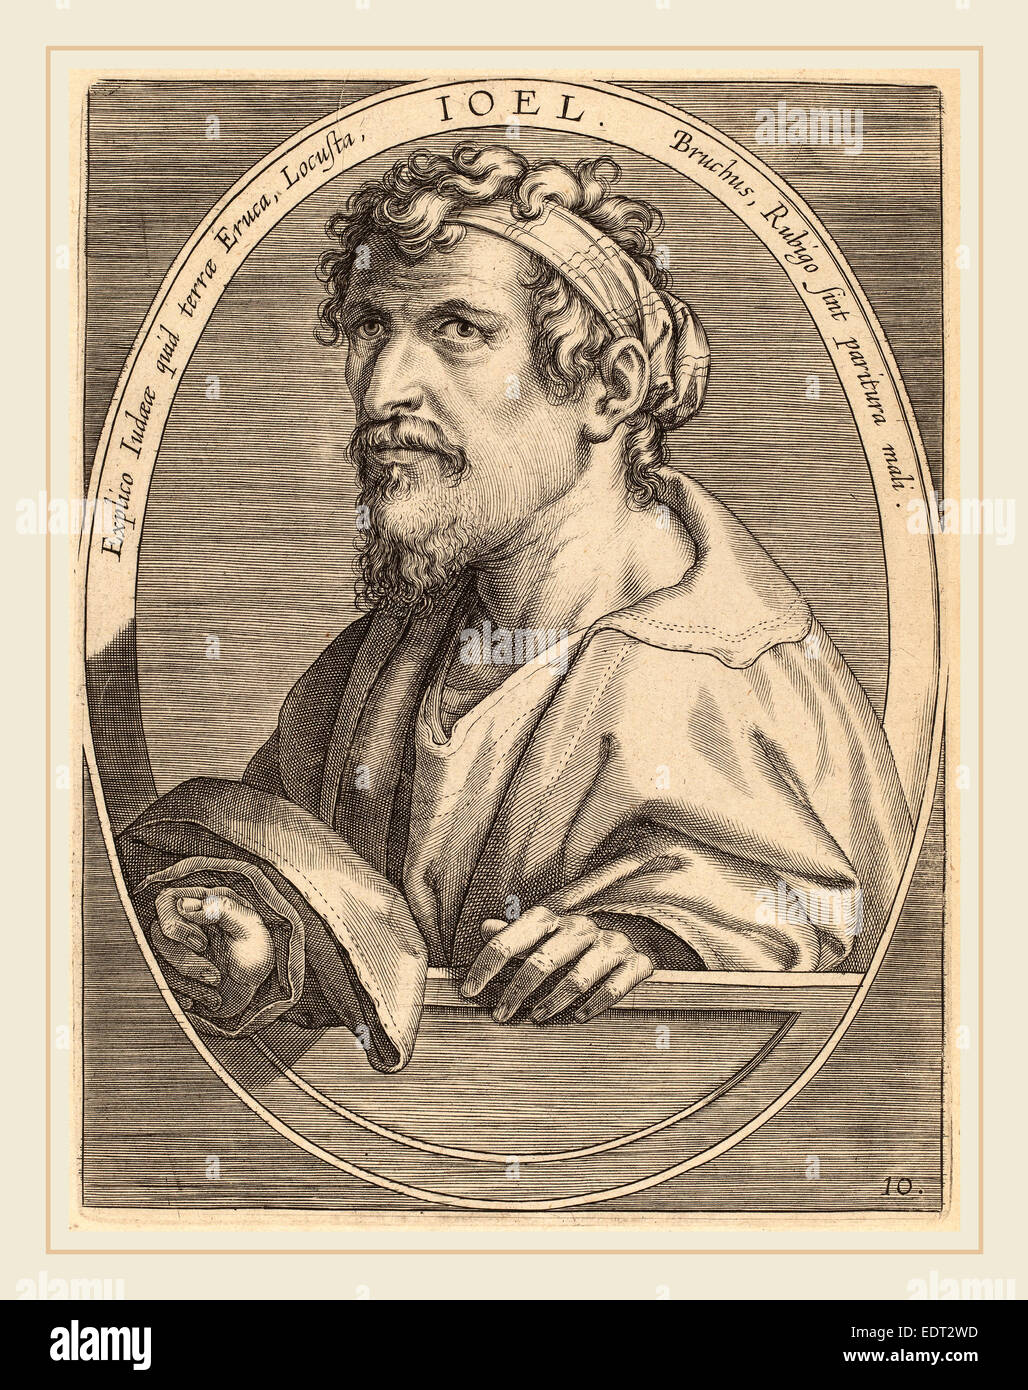 Theodor Galle after Jan van der Straet (Flemish, c. 1571-1633), Joel, published 1613, engraving on laid paper Stock Photo